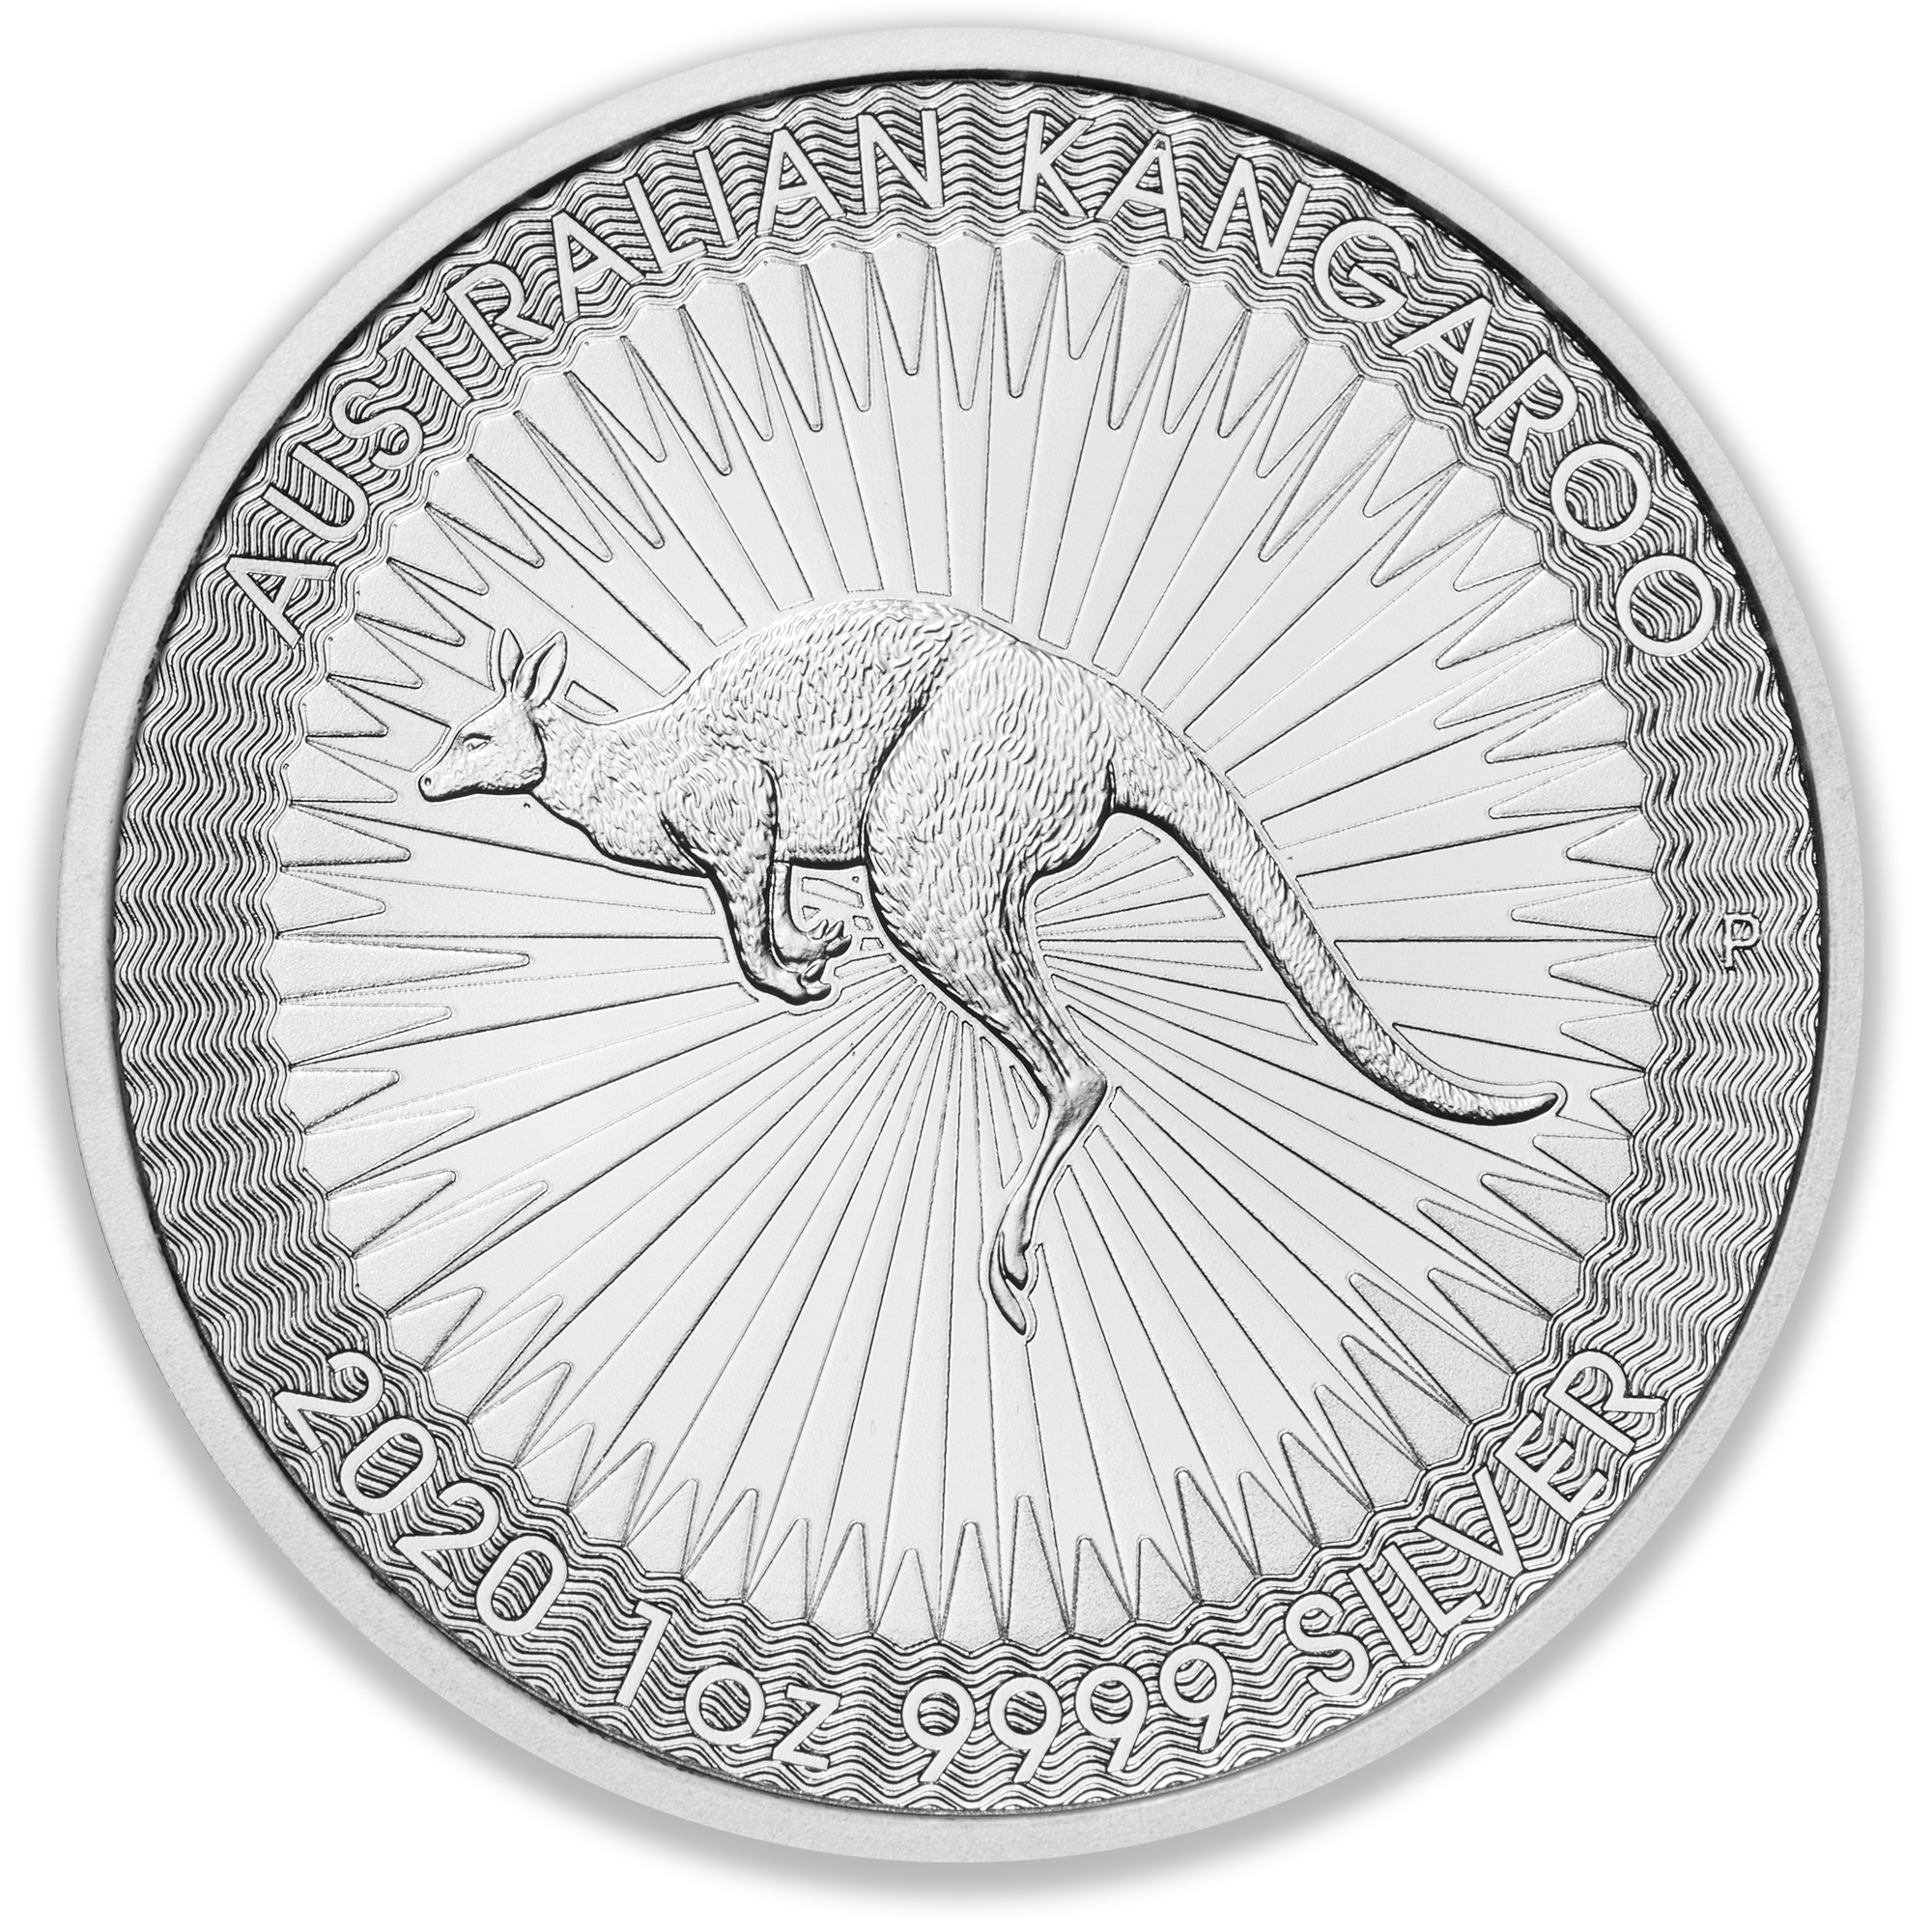 2020 1oz Perth Mint Silver Kangaroo Coin